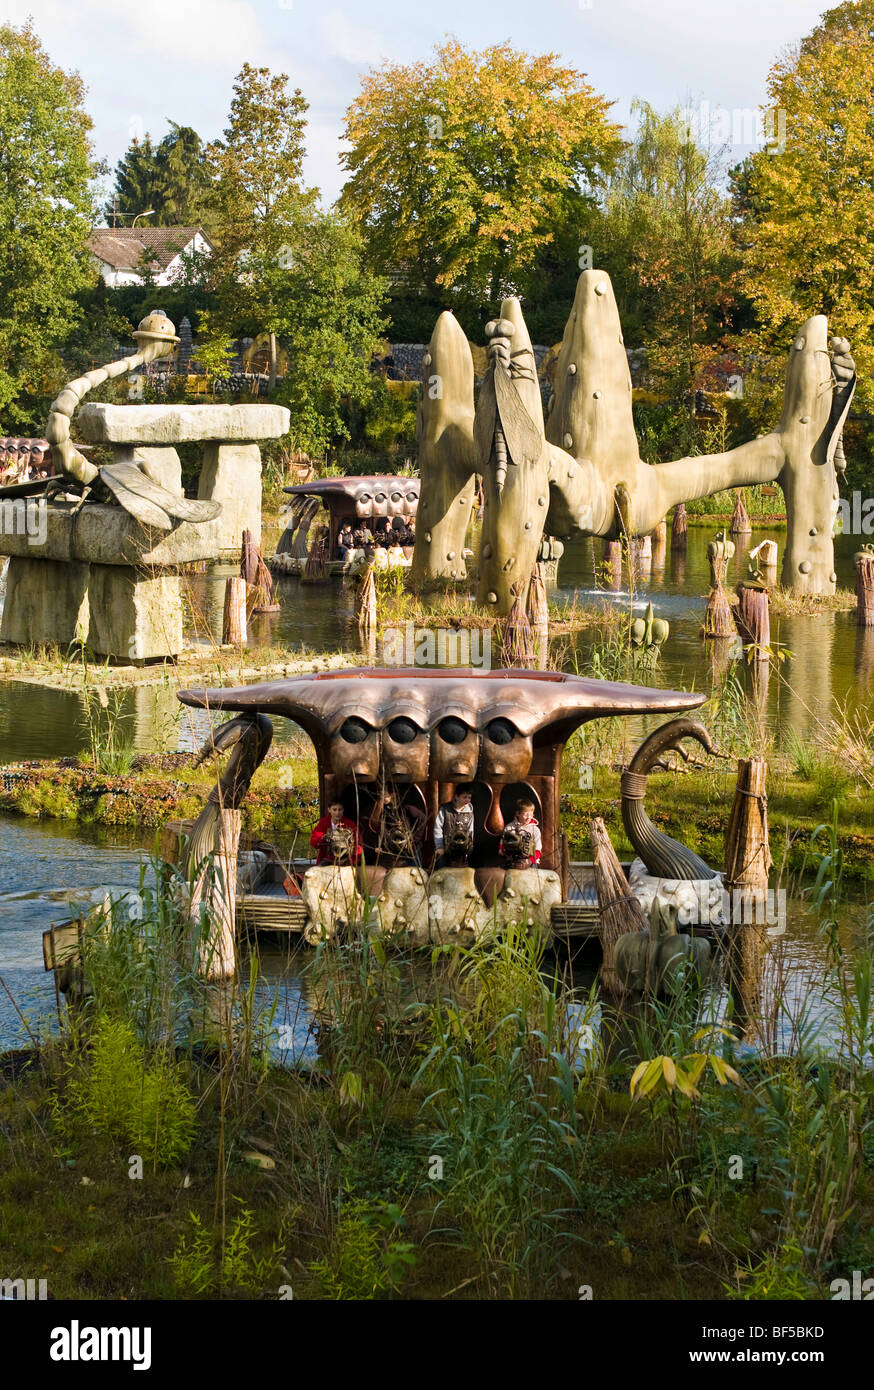 Le parc d'attractions Phantasialand, parc d'attraction, fantaisie, WAKOBATO Bruehl, Nordrhein-Westfalen, Germany, Europe Banque D'Images